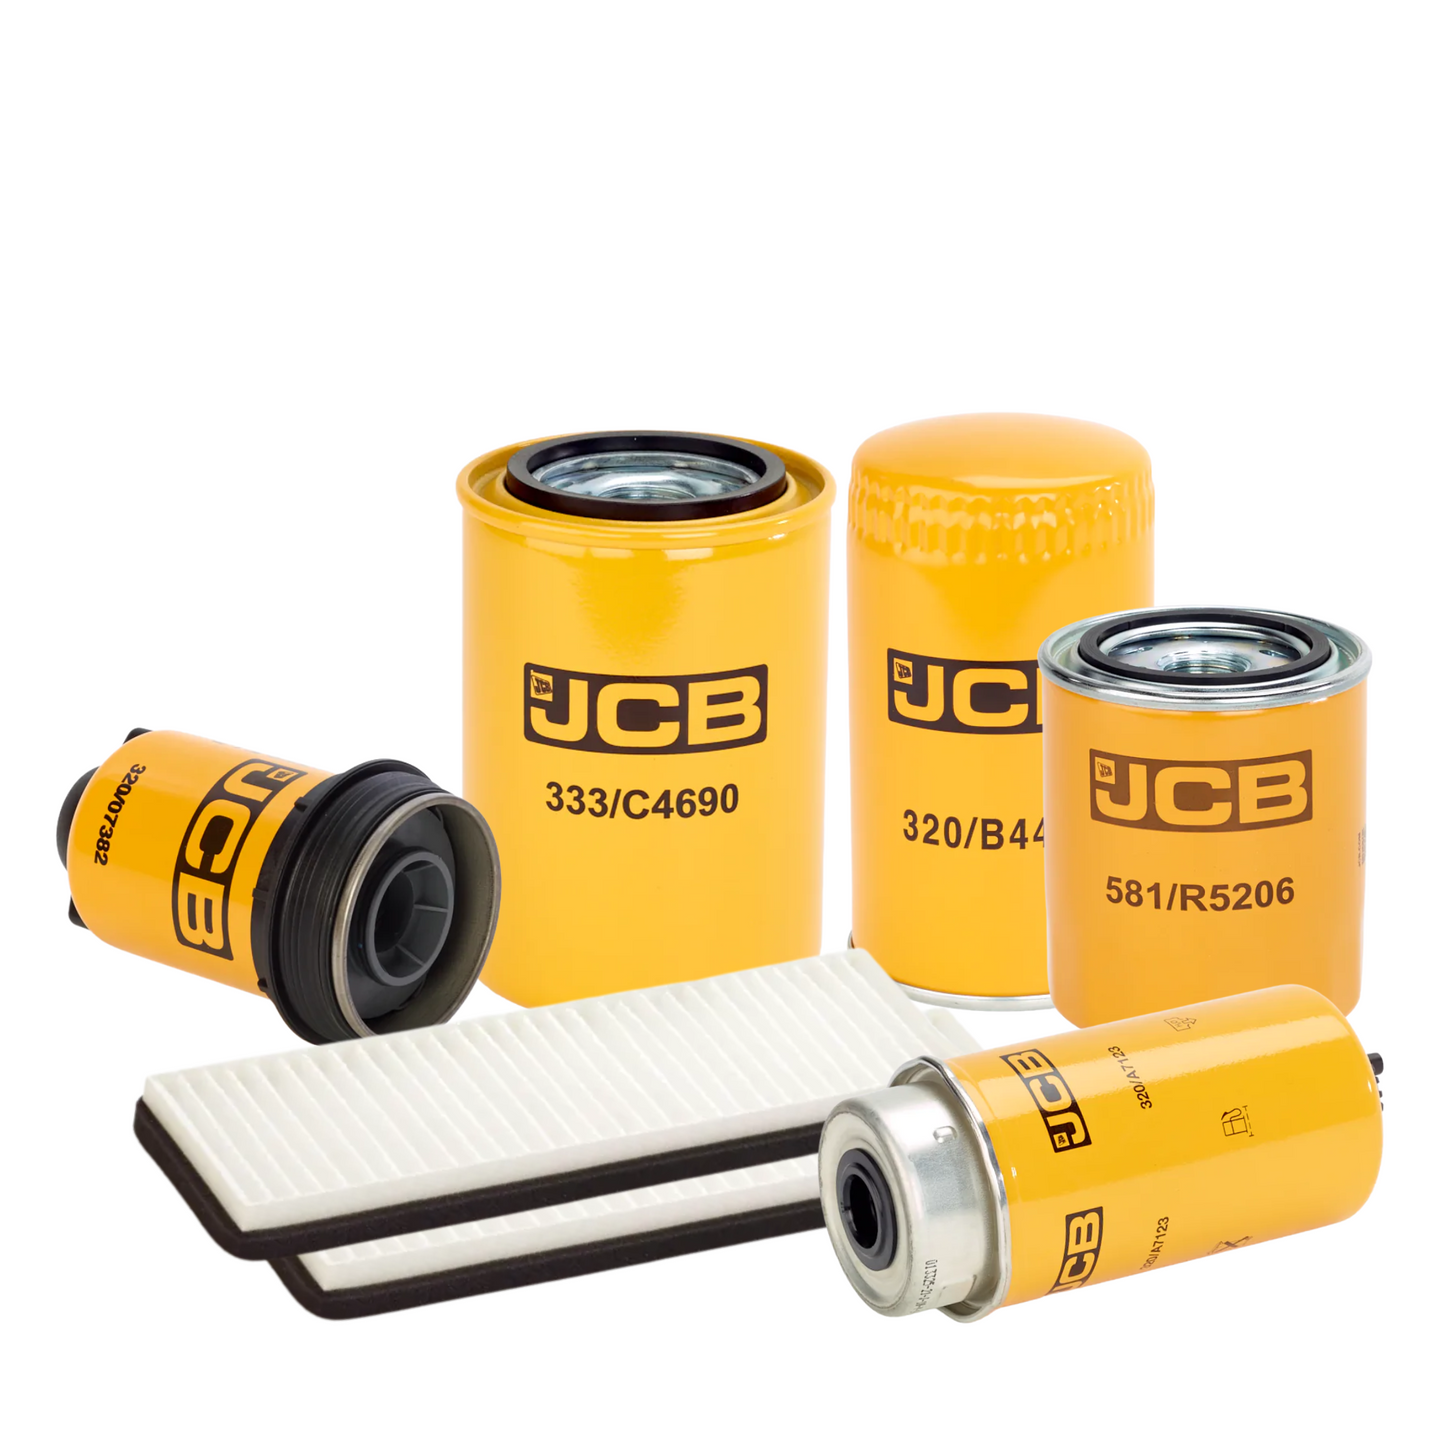 JCB 535-140 8500 Hour Filter Service Kit